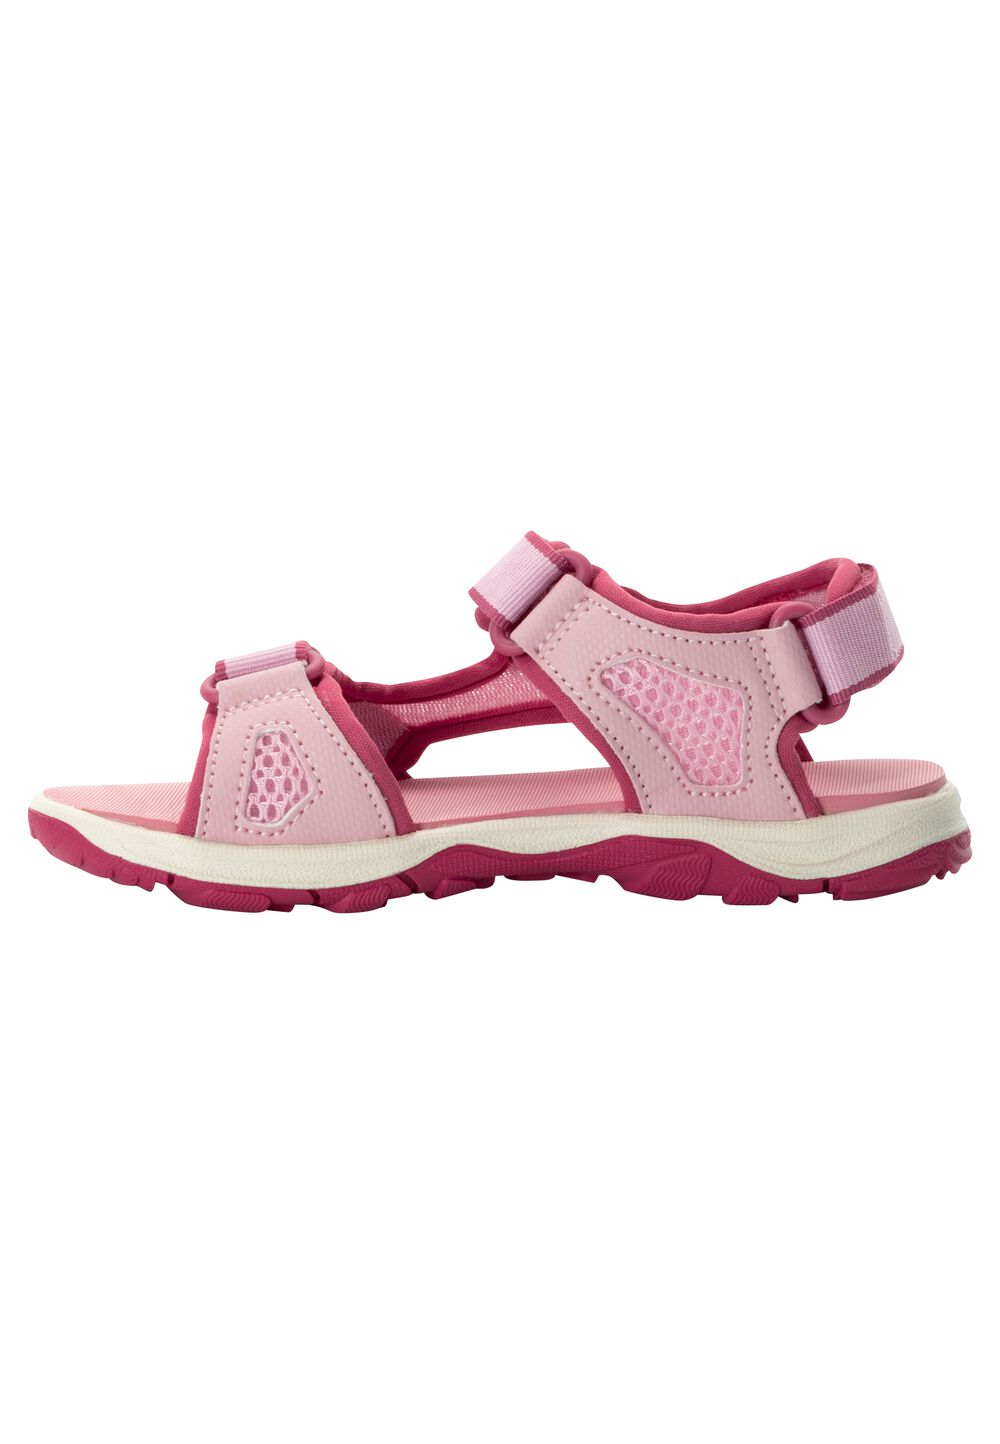 Jack Wolfskin Taraco Beach Sandal Kids Kinderen sandalen 34 soft pink soft pink